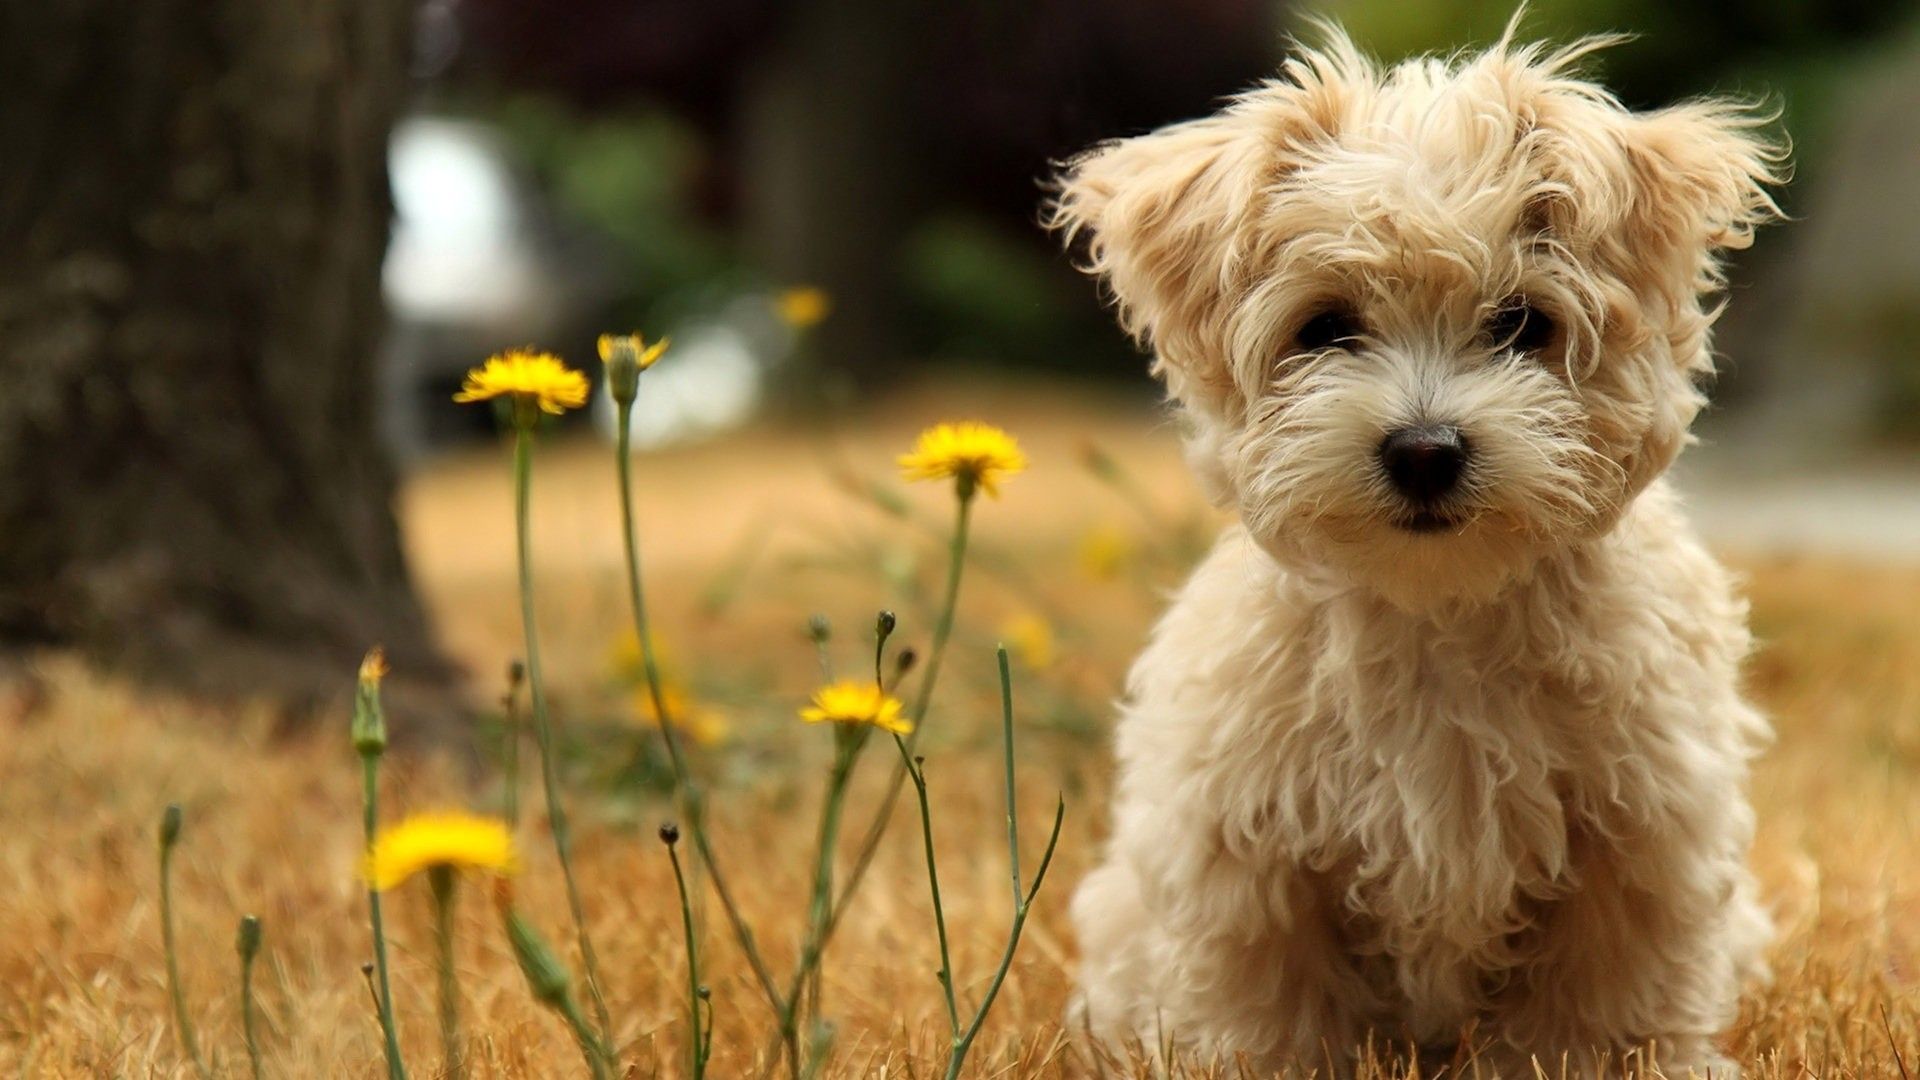 Puppy cute animals HD wallpaper download